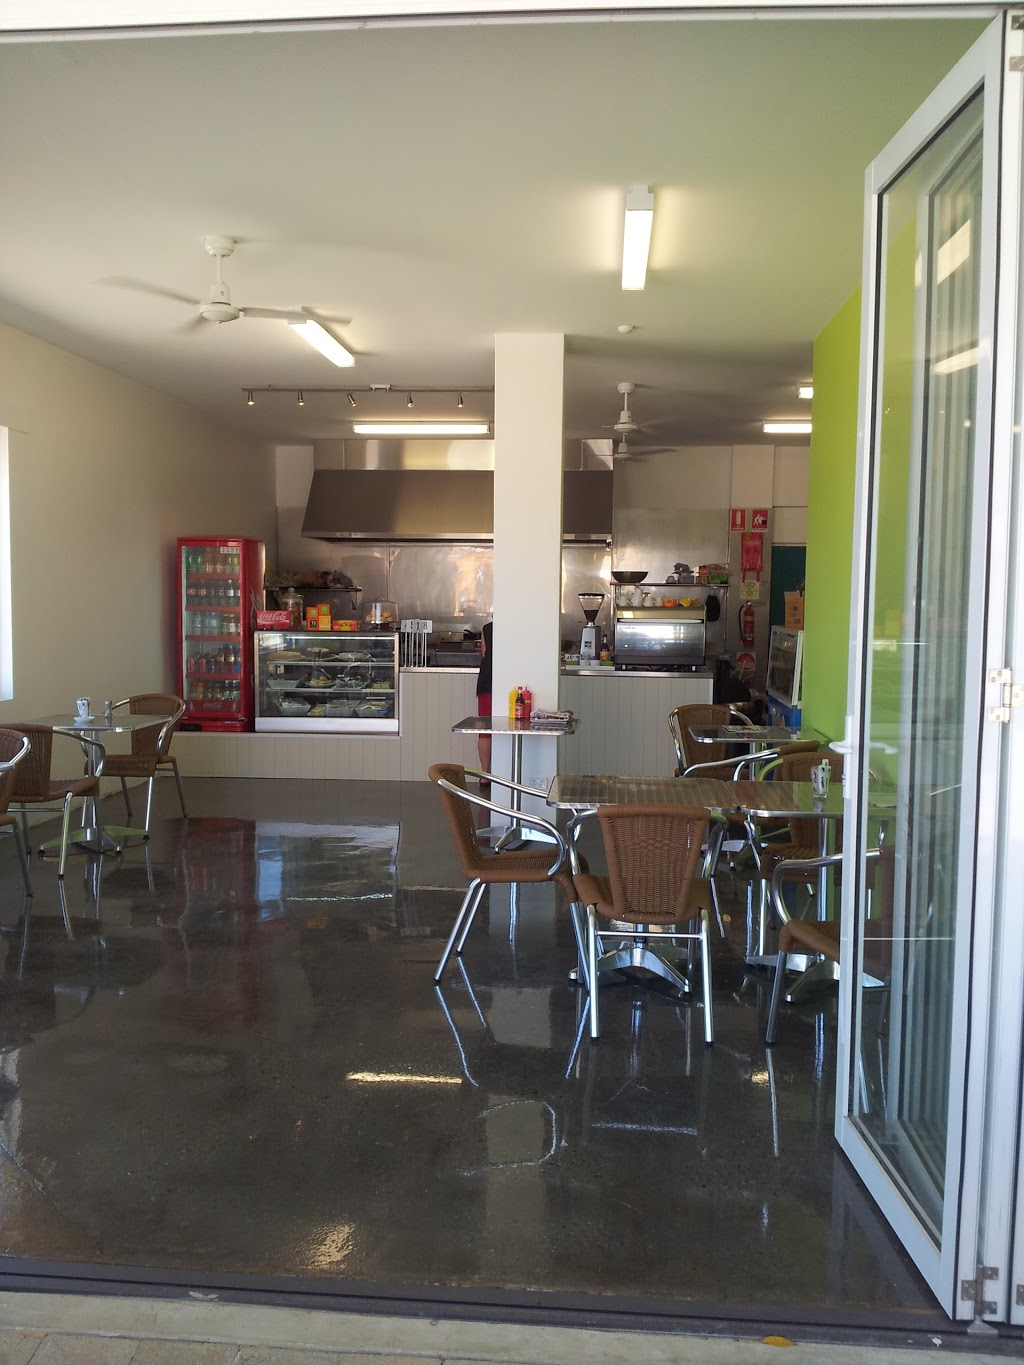 Neptunes Cafe | cafe | Shop 6/10 Enterprise Ave, Two Rocks WA 6037, Australia | 0895615367 OR +61 8 9561 5367